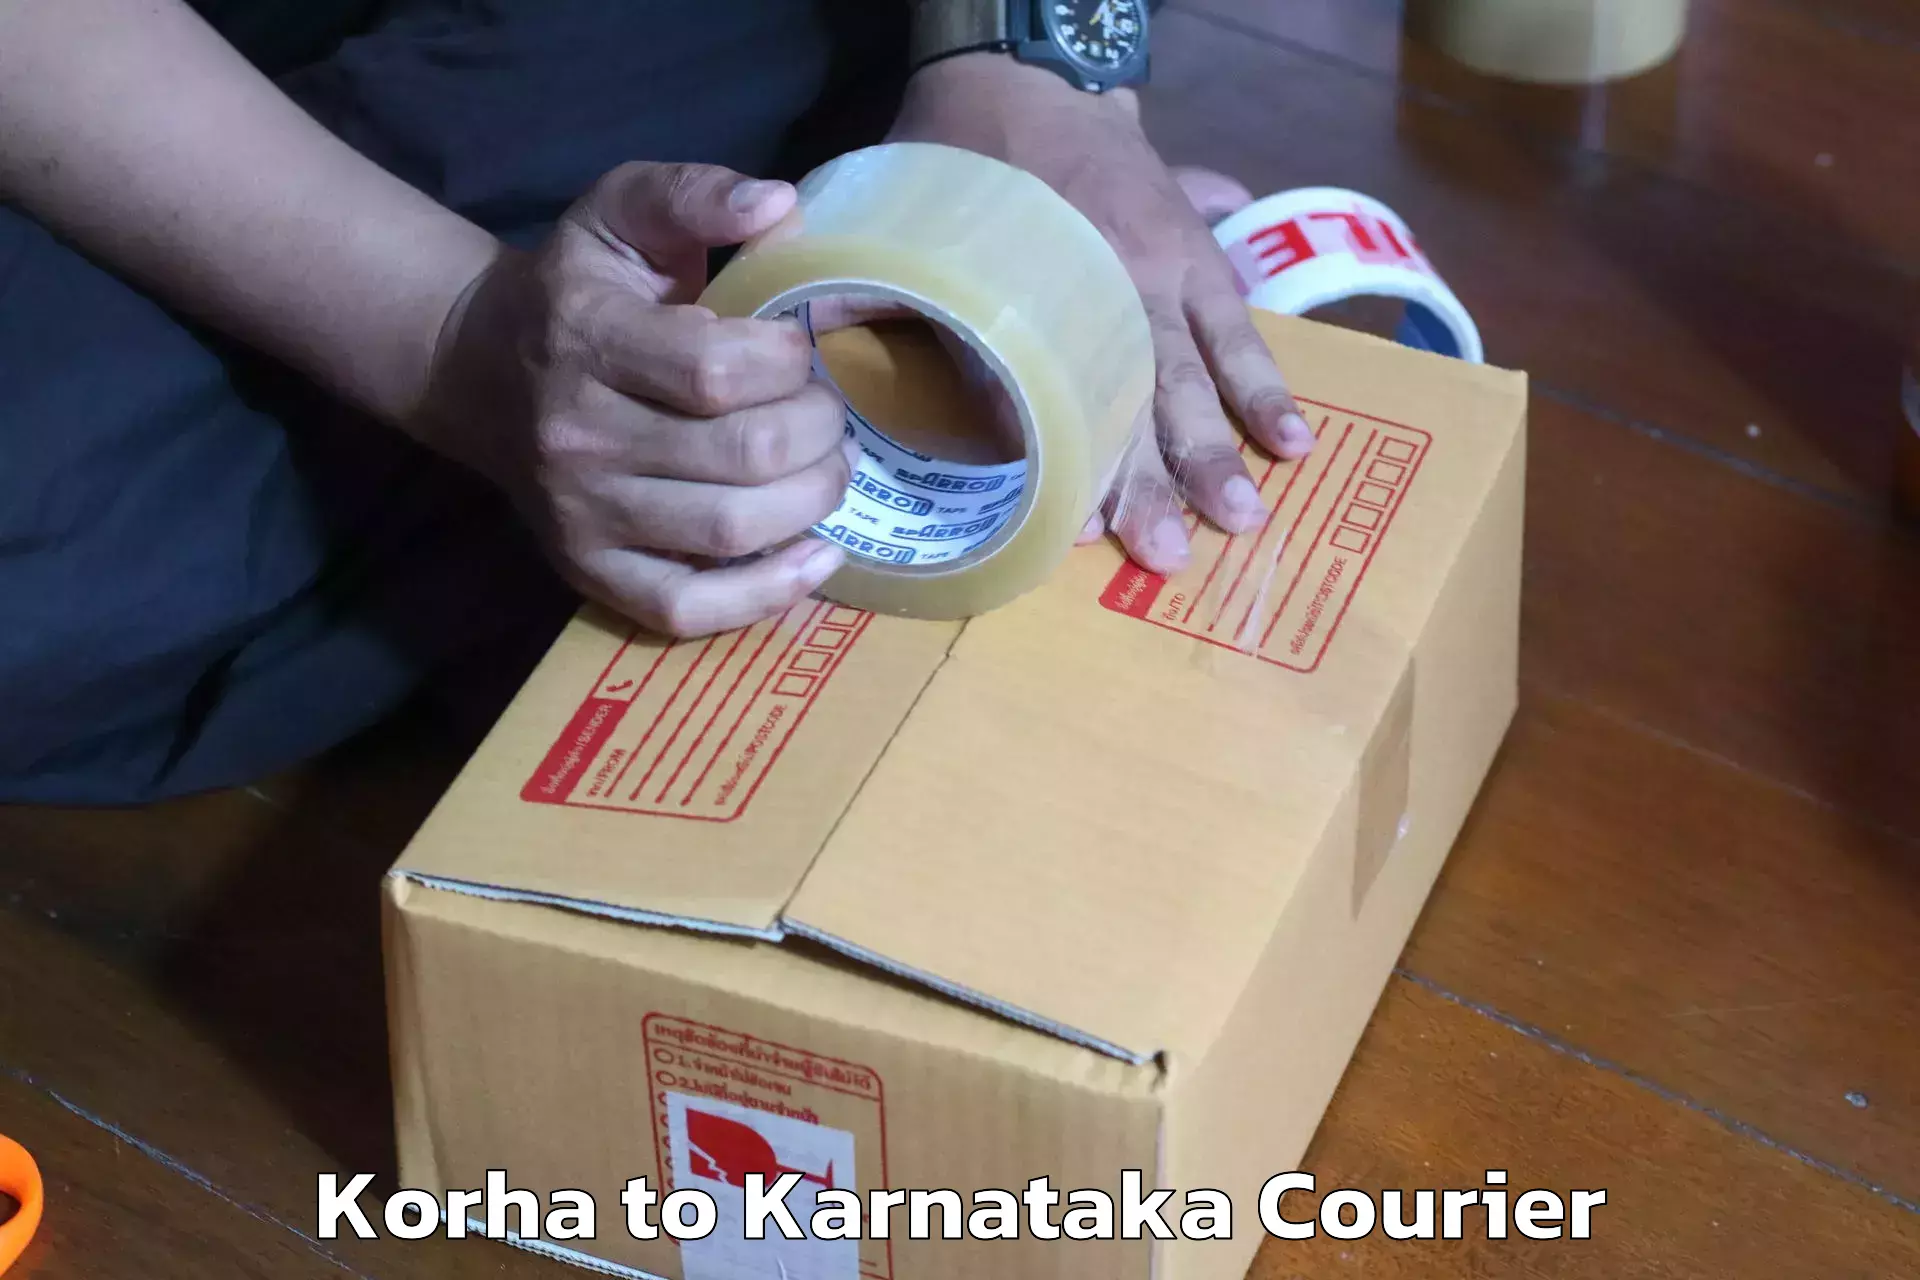 Efficient moving company Korha to Mundgod